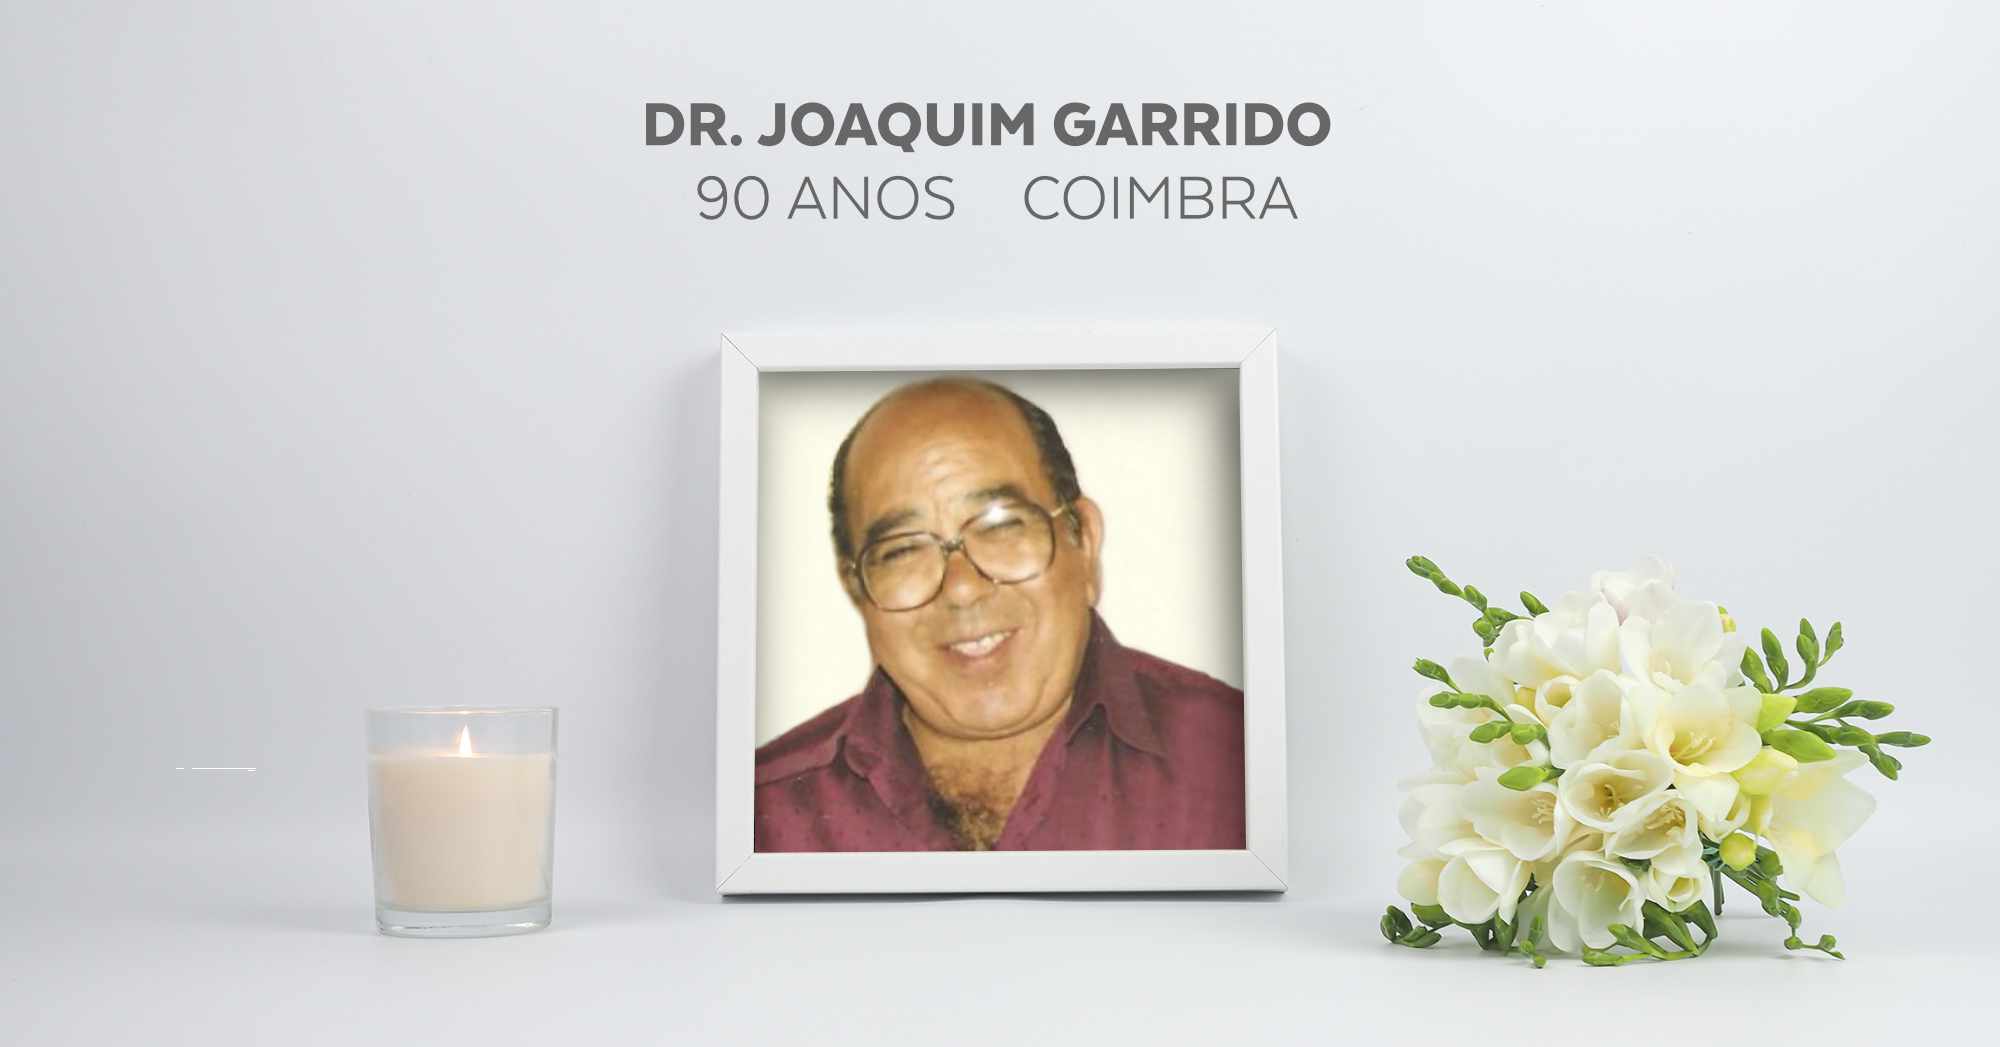 Dr. Joaquim Garrido